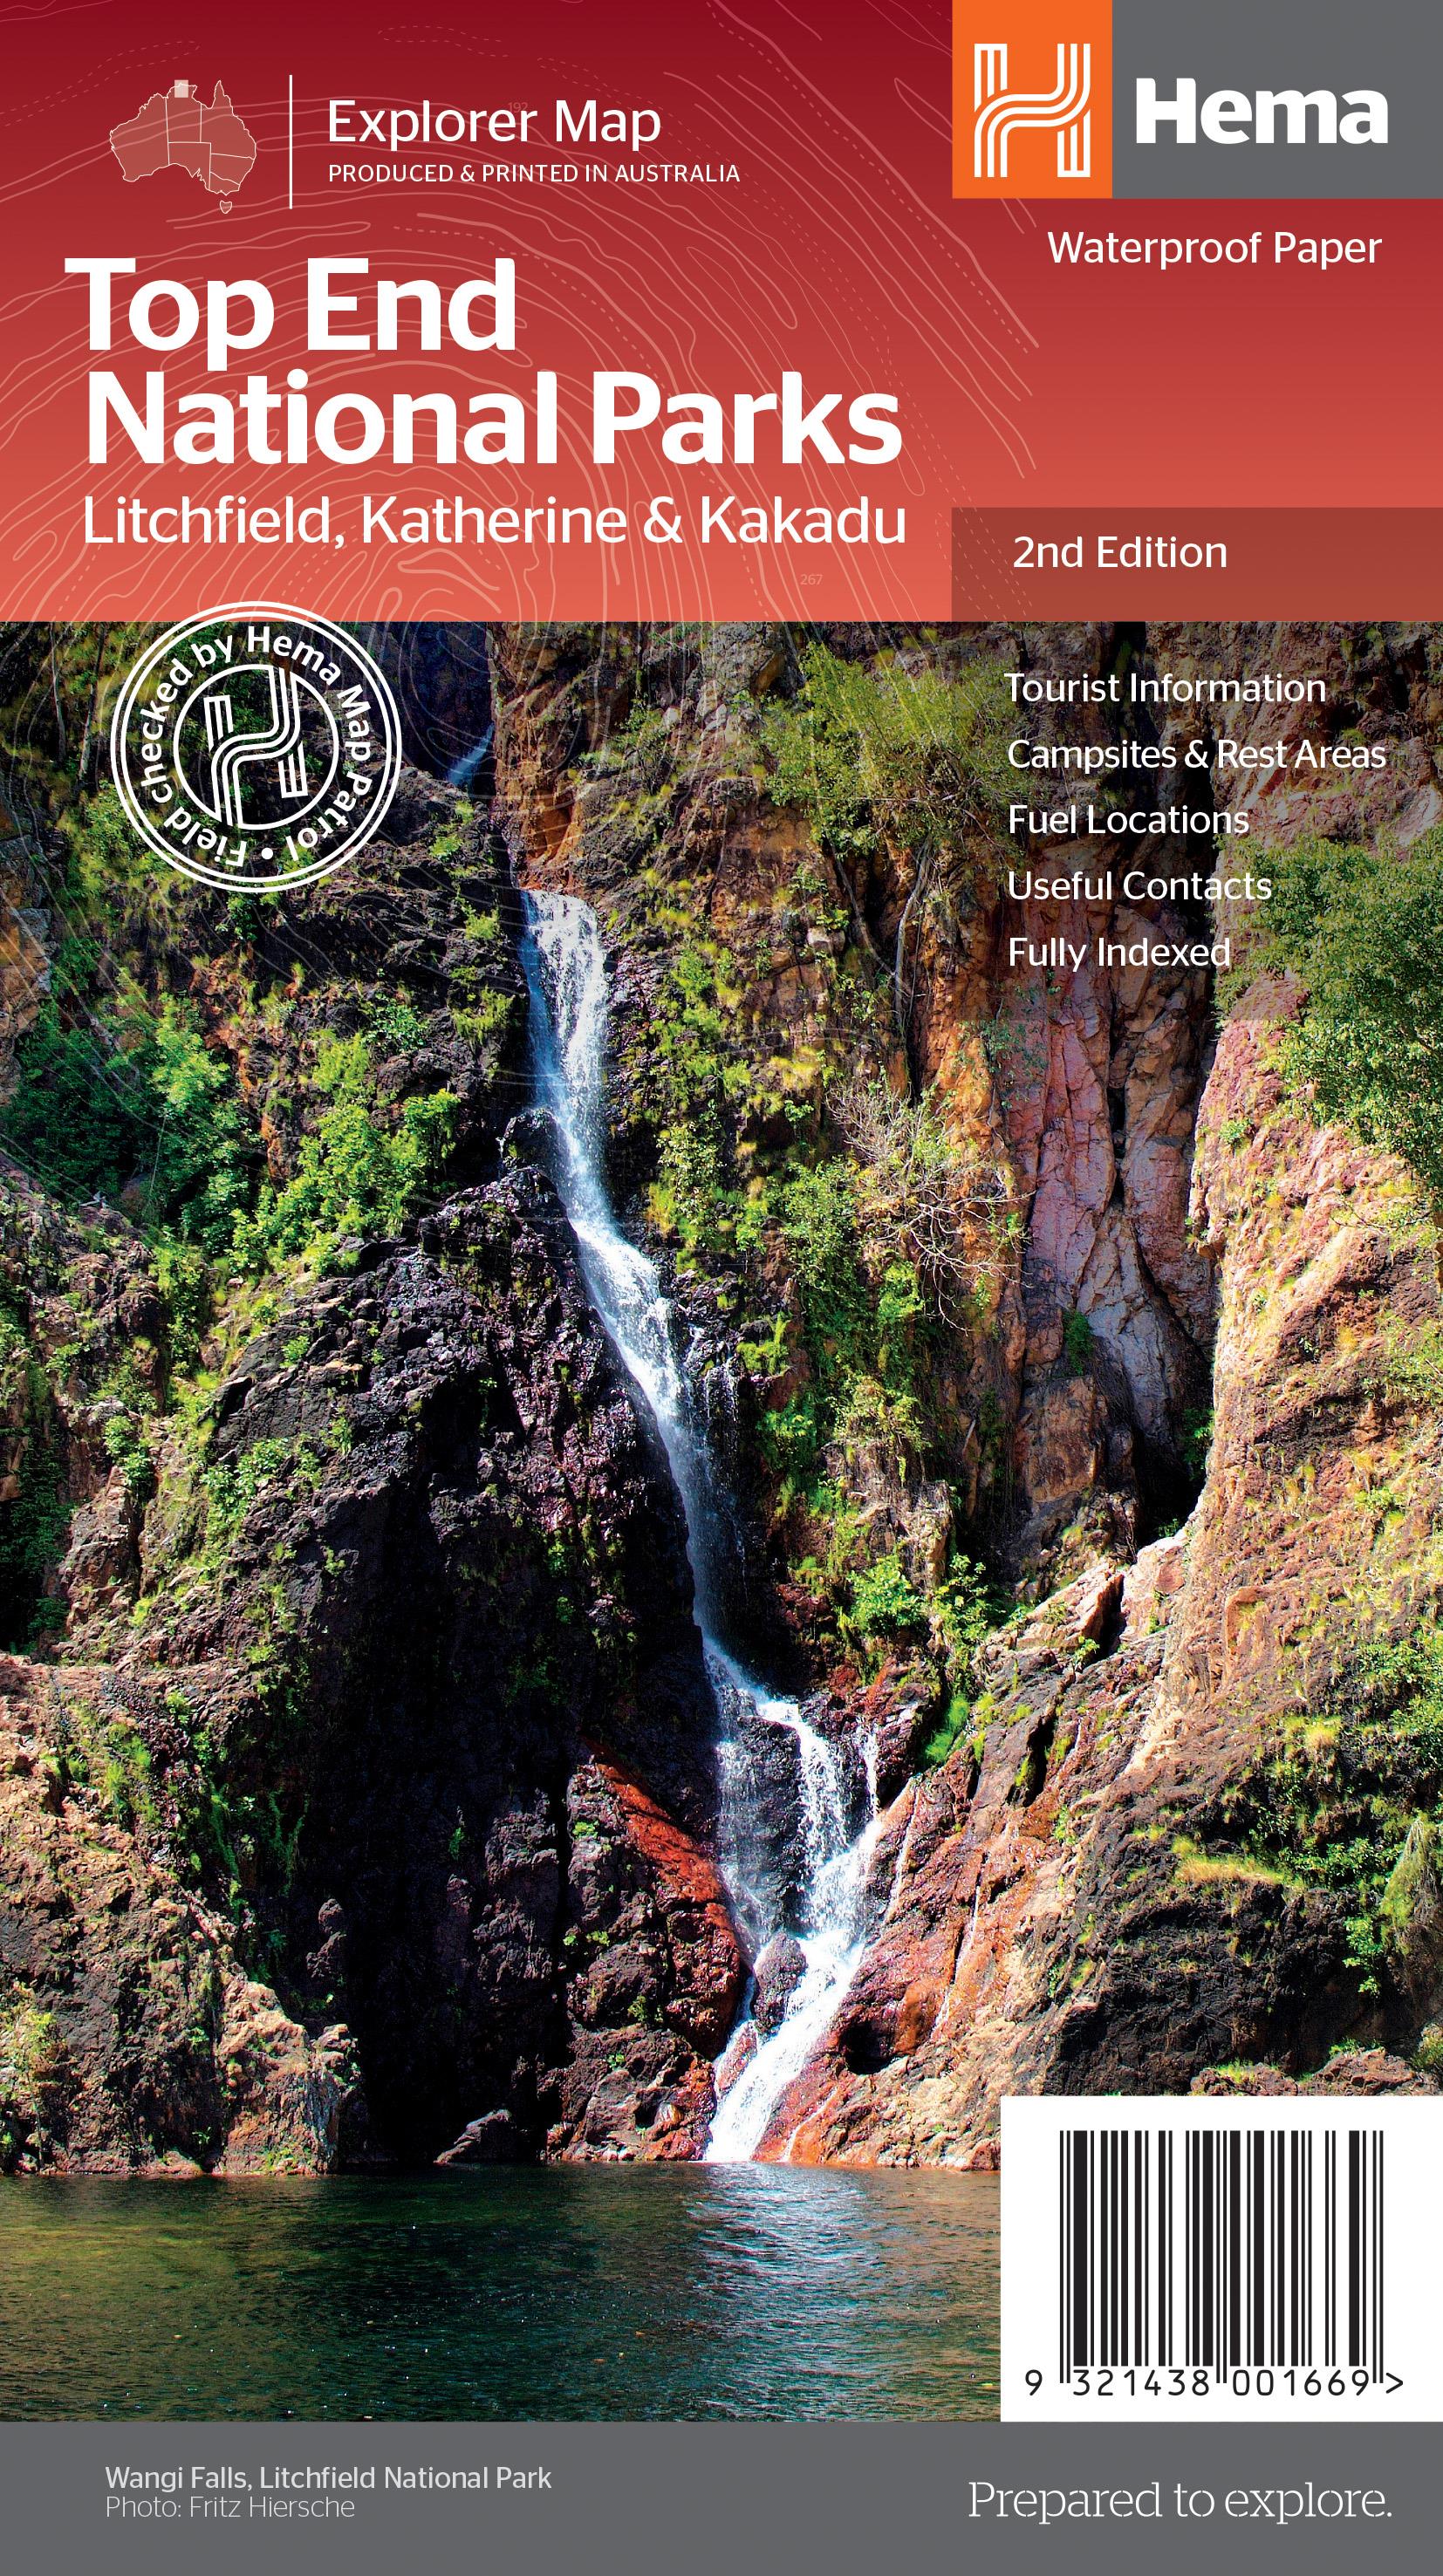 Top End National Parks: Litchfield, Katherine & Kakadu (2nd Edition) by Hema Maps